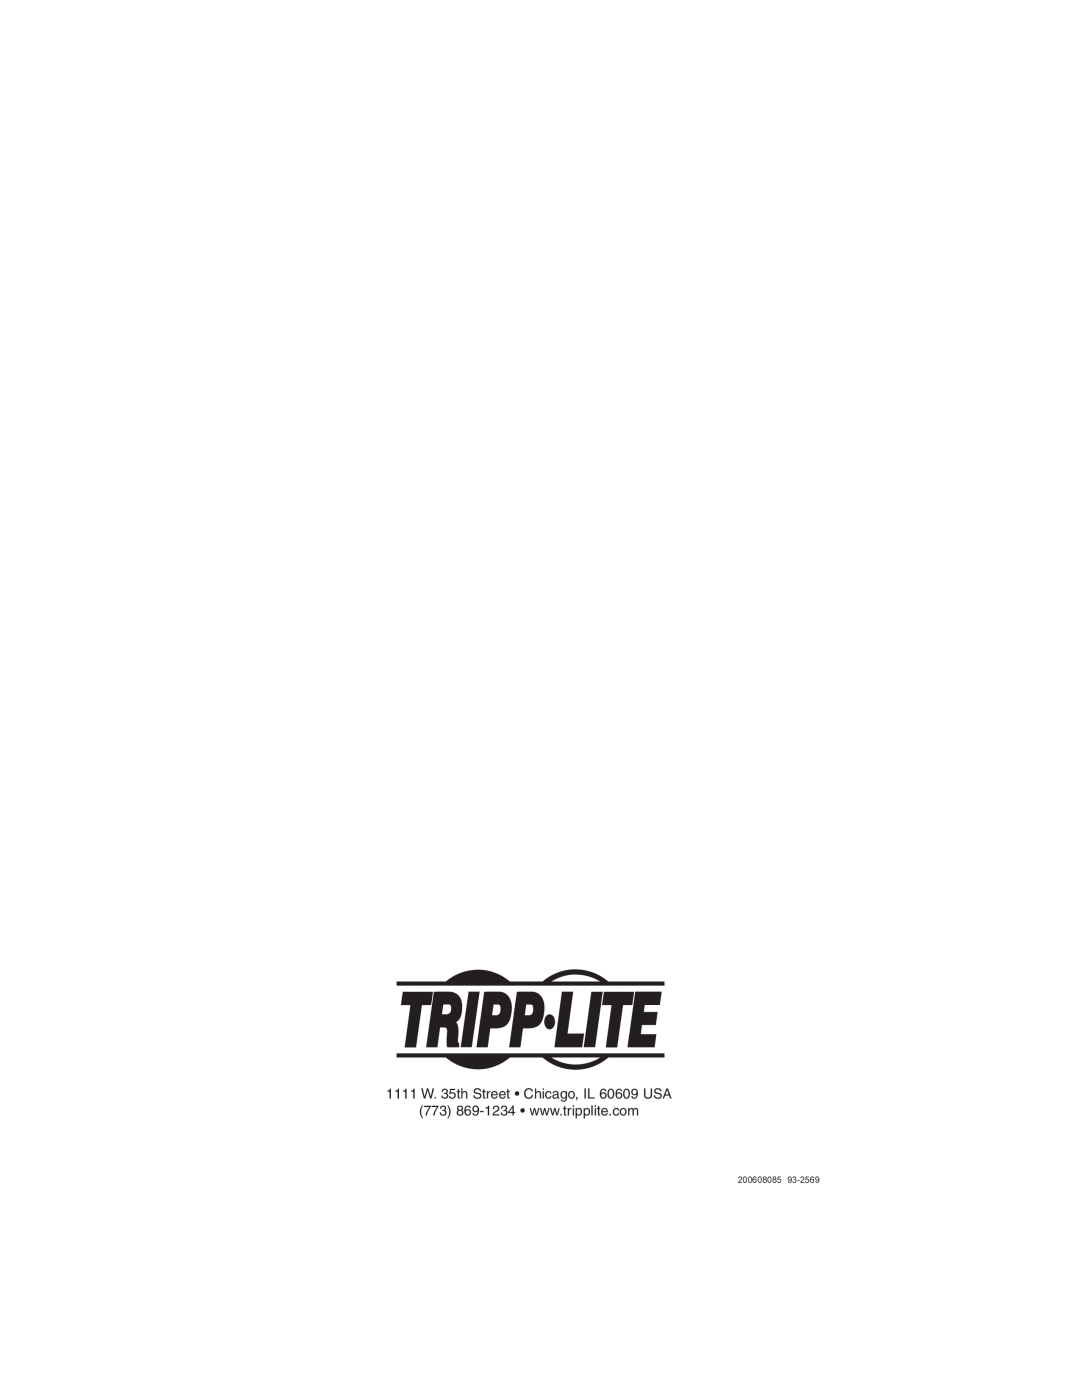 Tripp Lite PDUMV40 owner manual 1111 W. 35th Street Chicago, IL 60609 USA, 200608085 